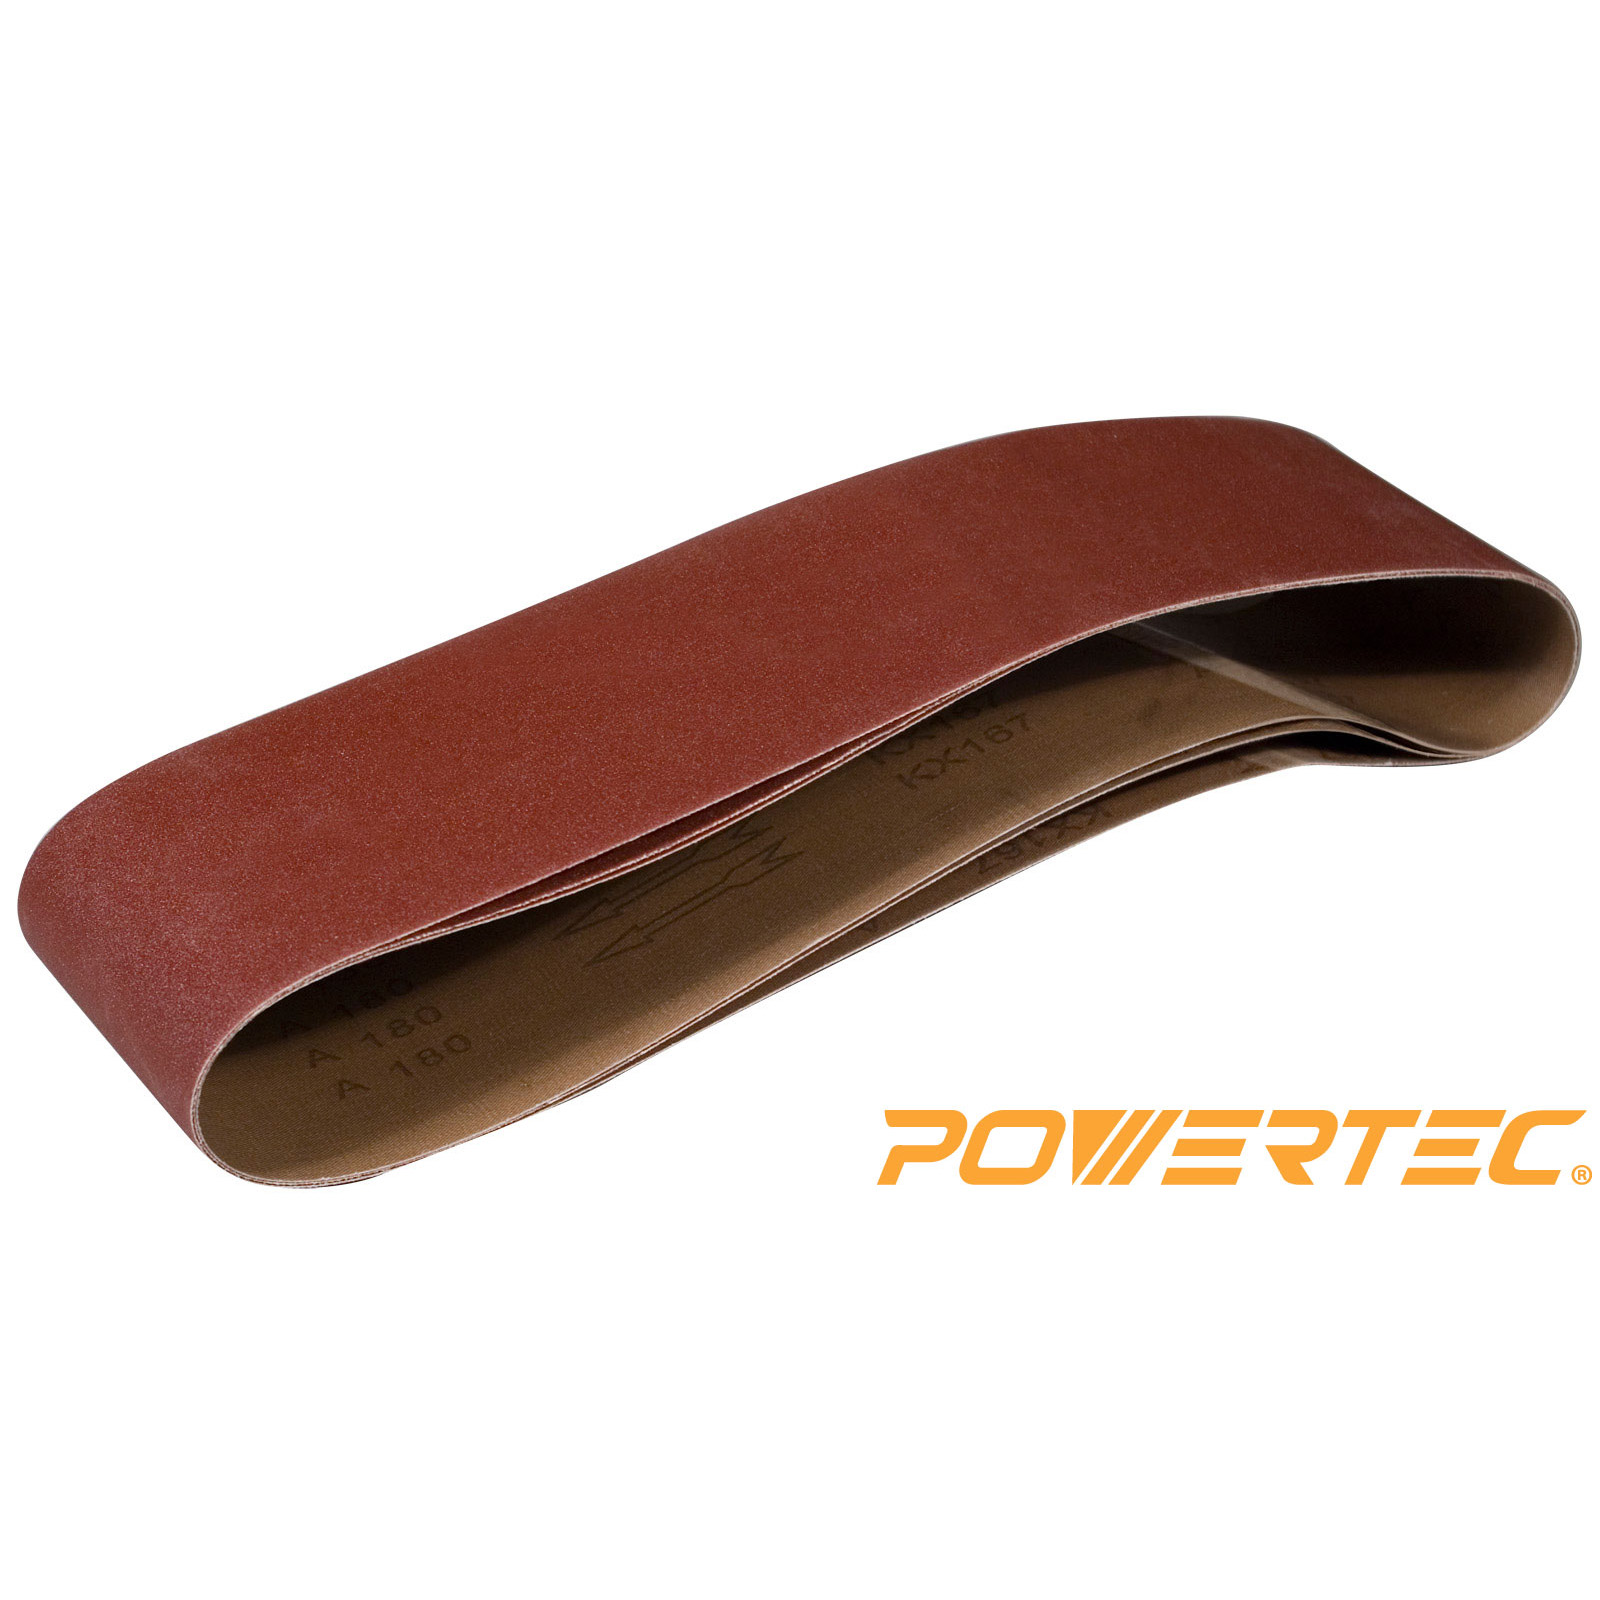 Powertec 110213 6-Inch x 48-Inch 120 Grit Aluminum Oxide Sanding Belt, 3-Pack